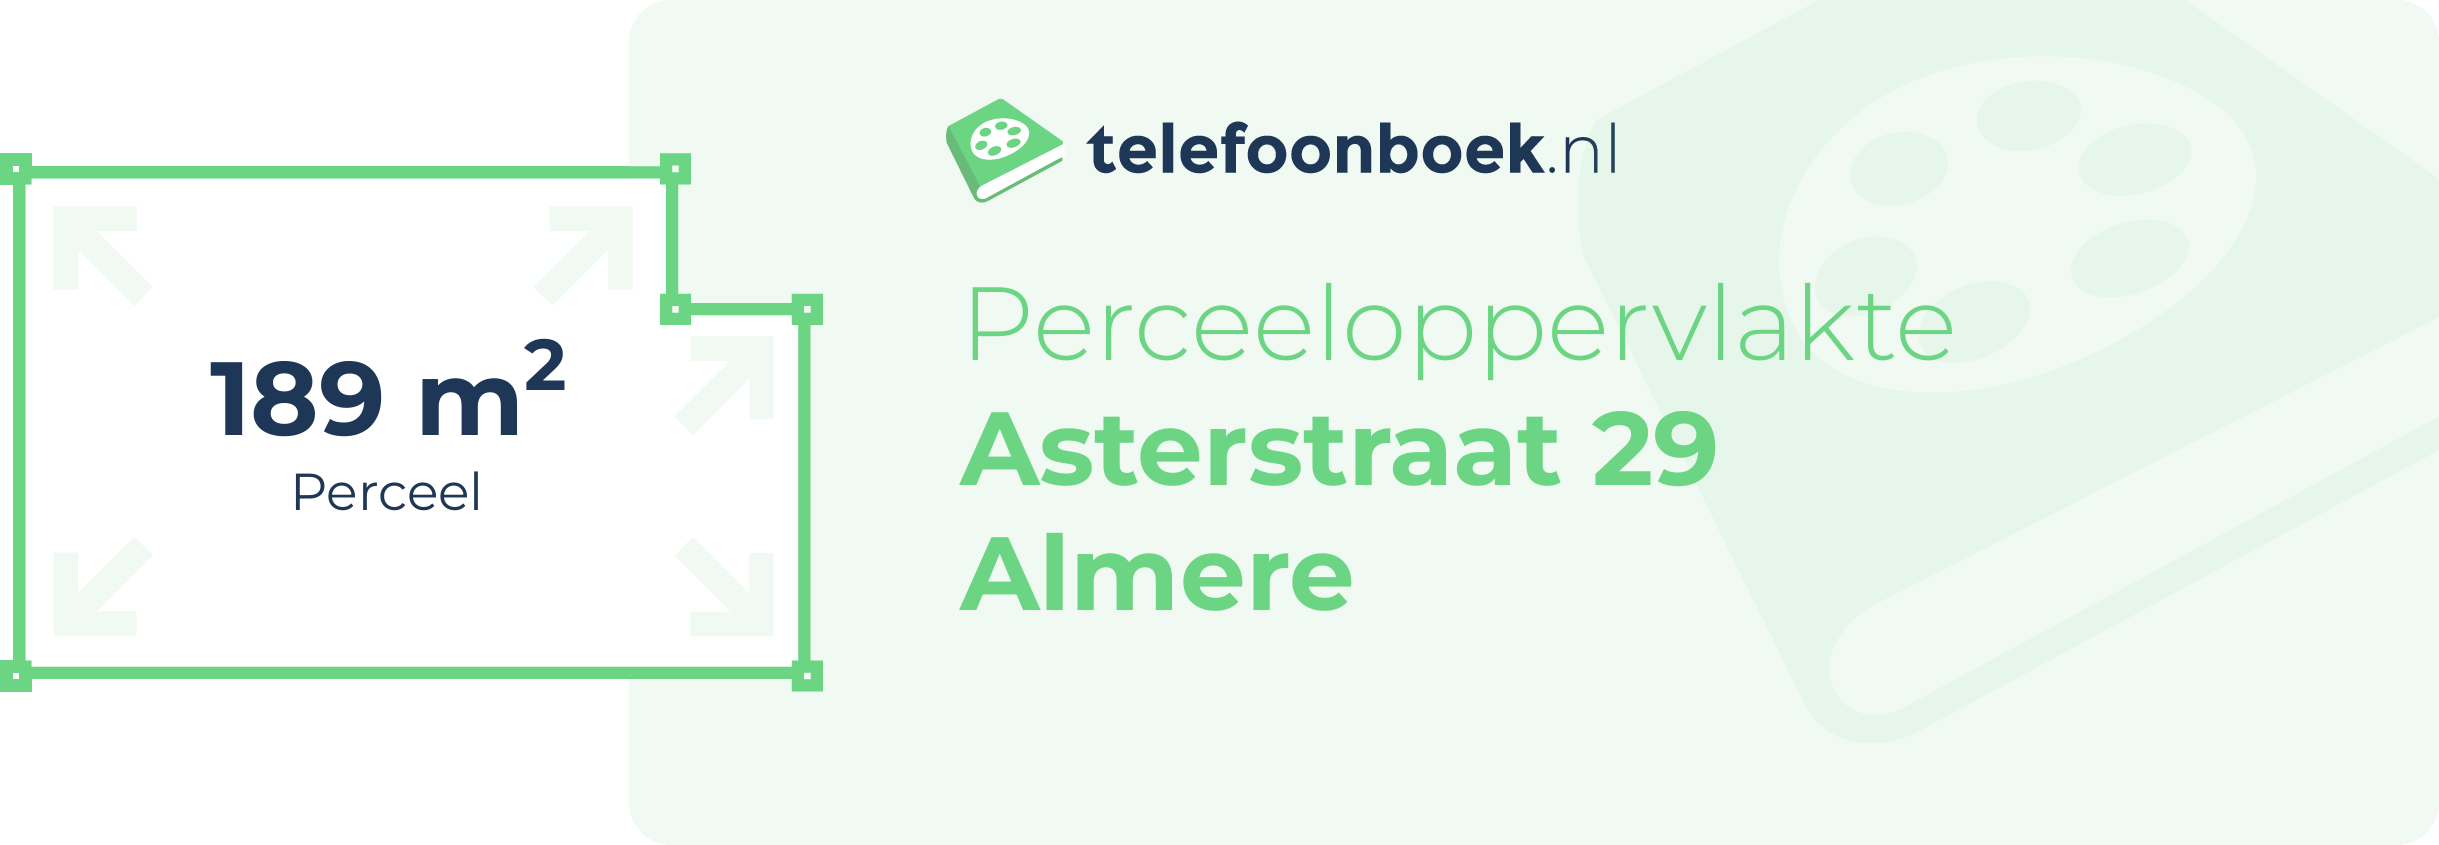 Perceeloppervlakte Asterstraat 29 Almere